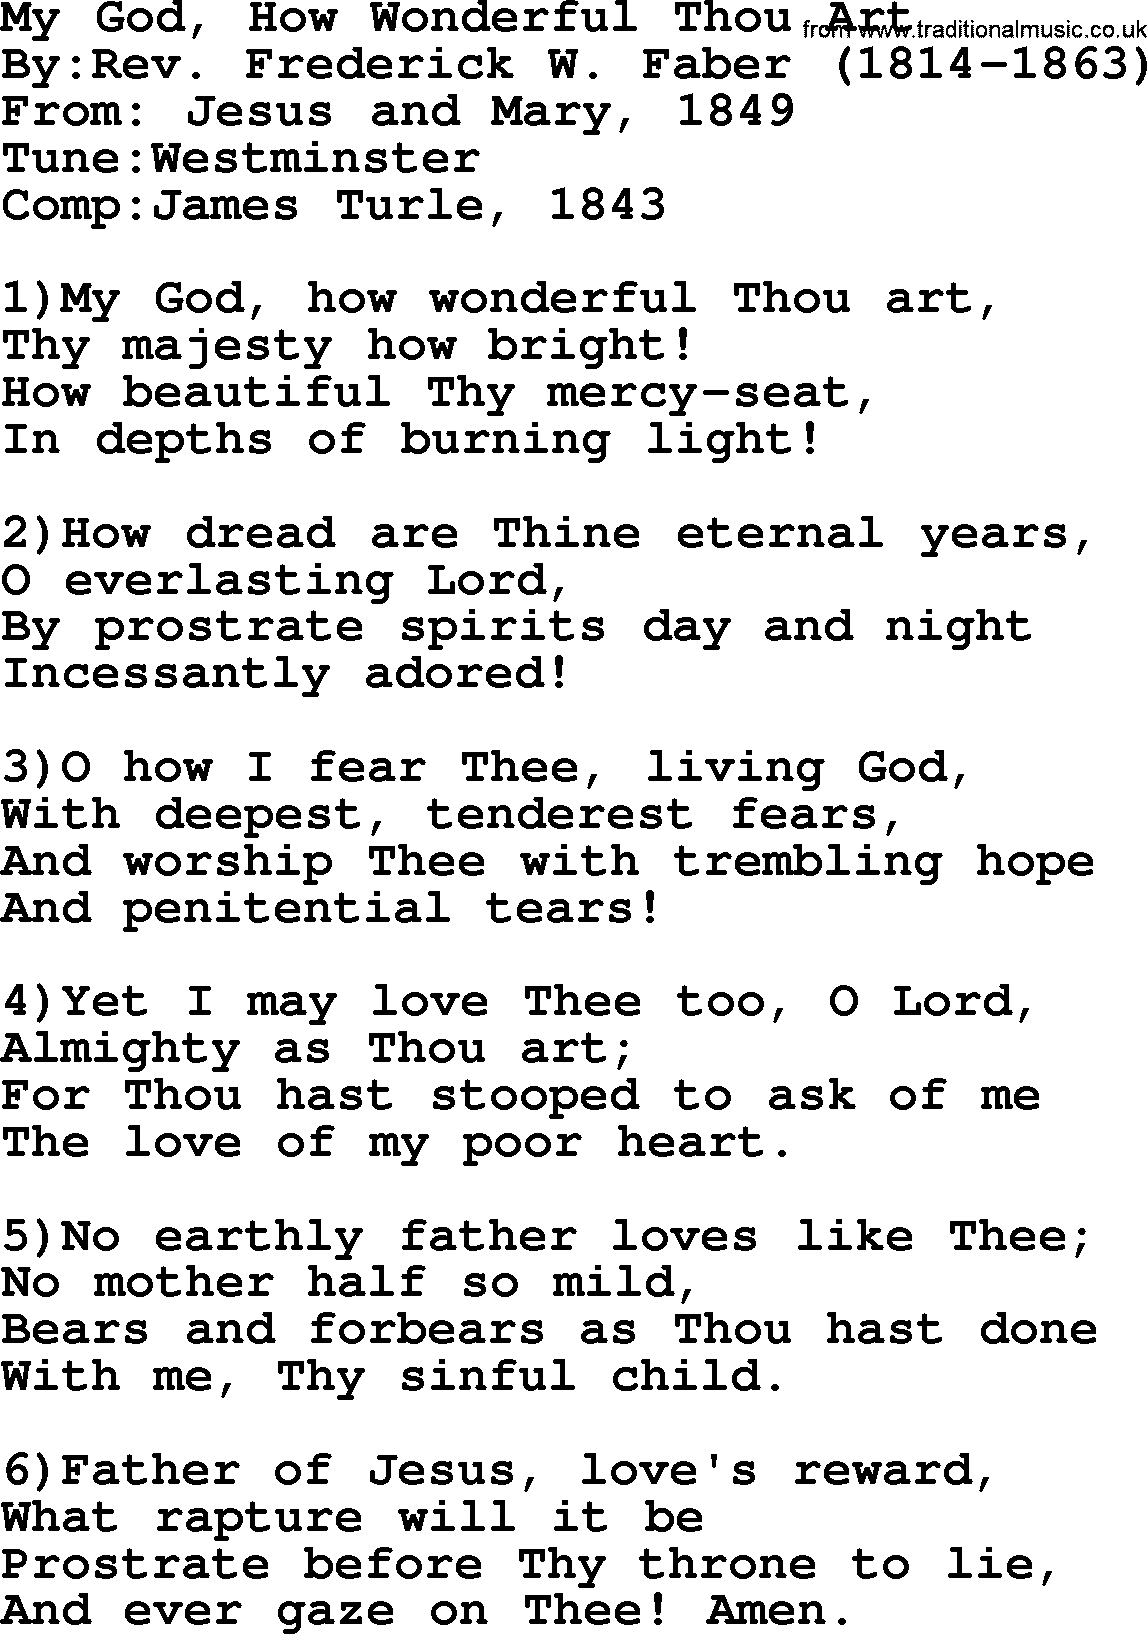 Methodist Hymn: My God, How Wonderful Thou Art, lyrics